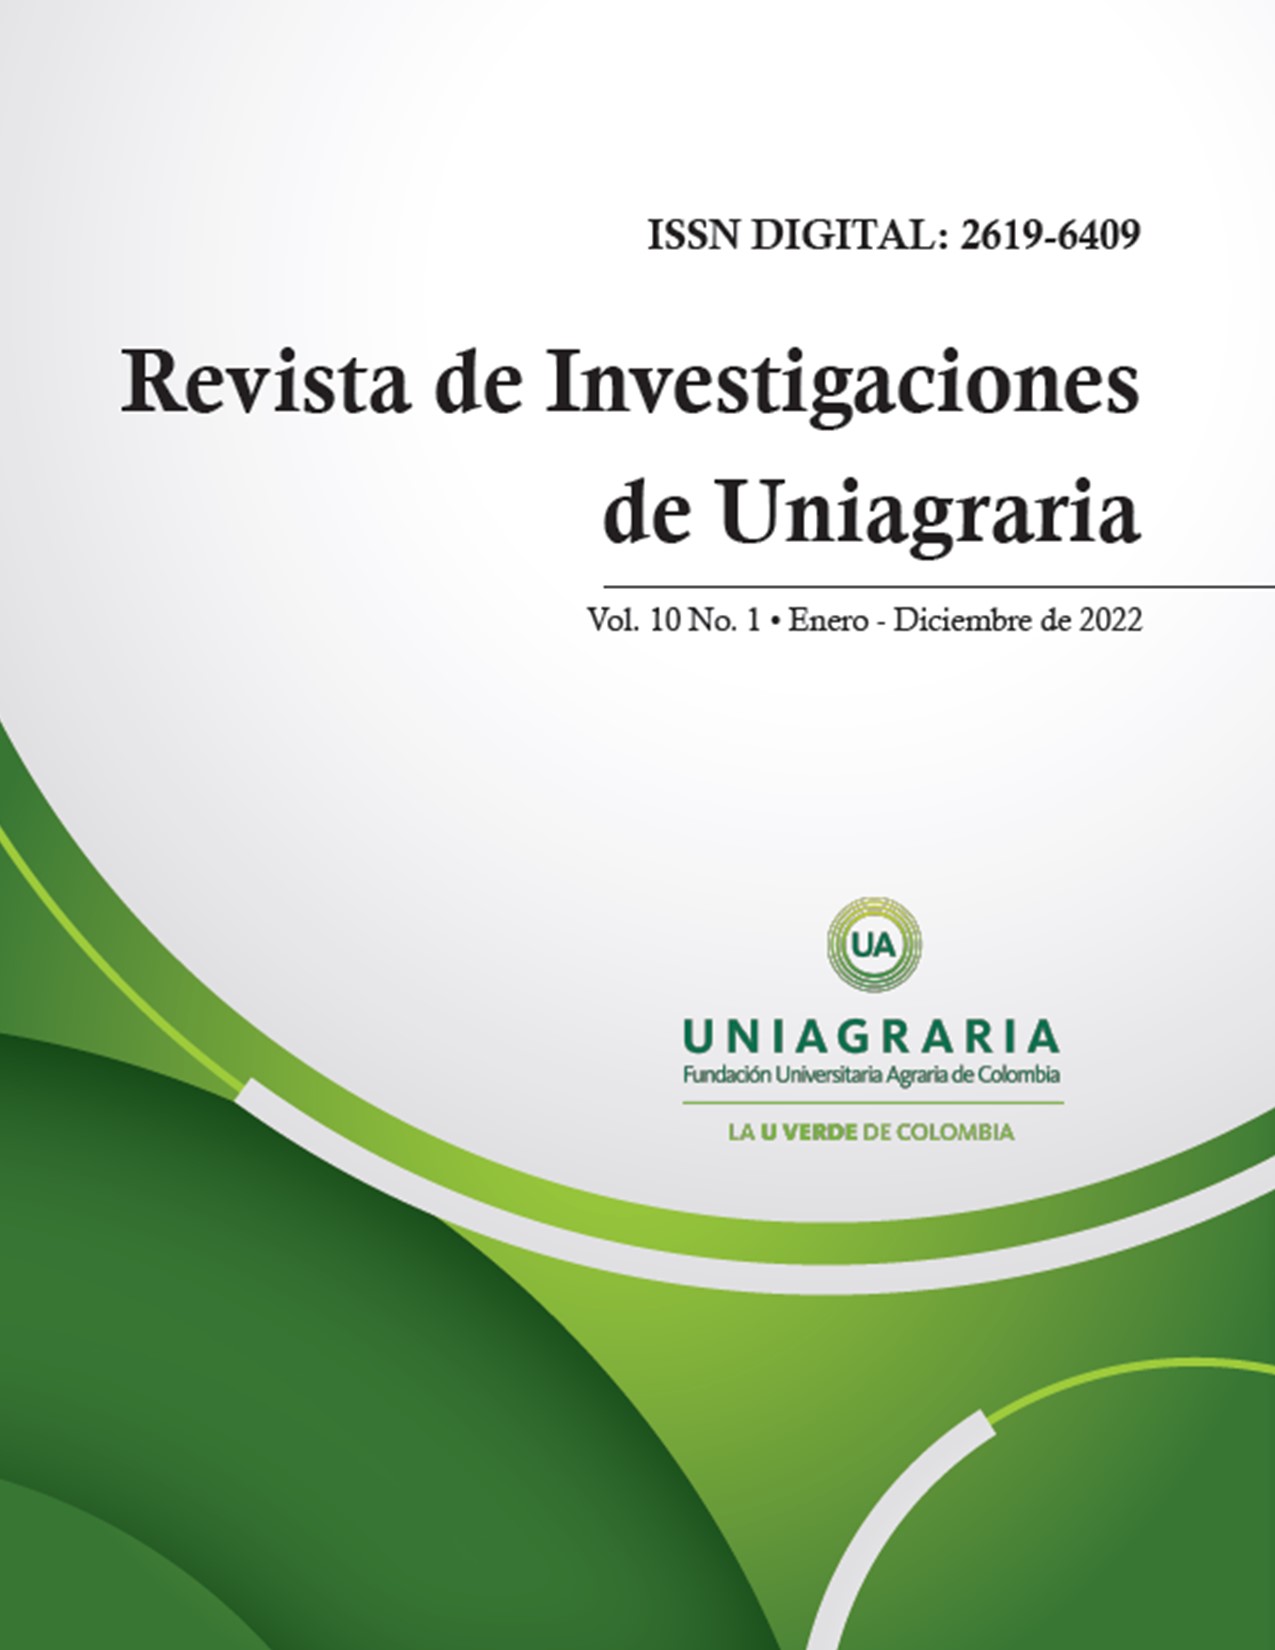 REVISTA DE INVESTIGACIONES DE UNIAGRARIA Vol. 10 Enero-diciembre 2022